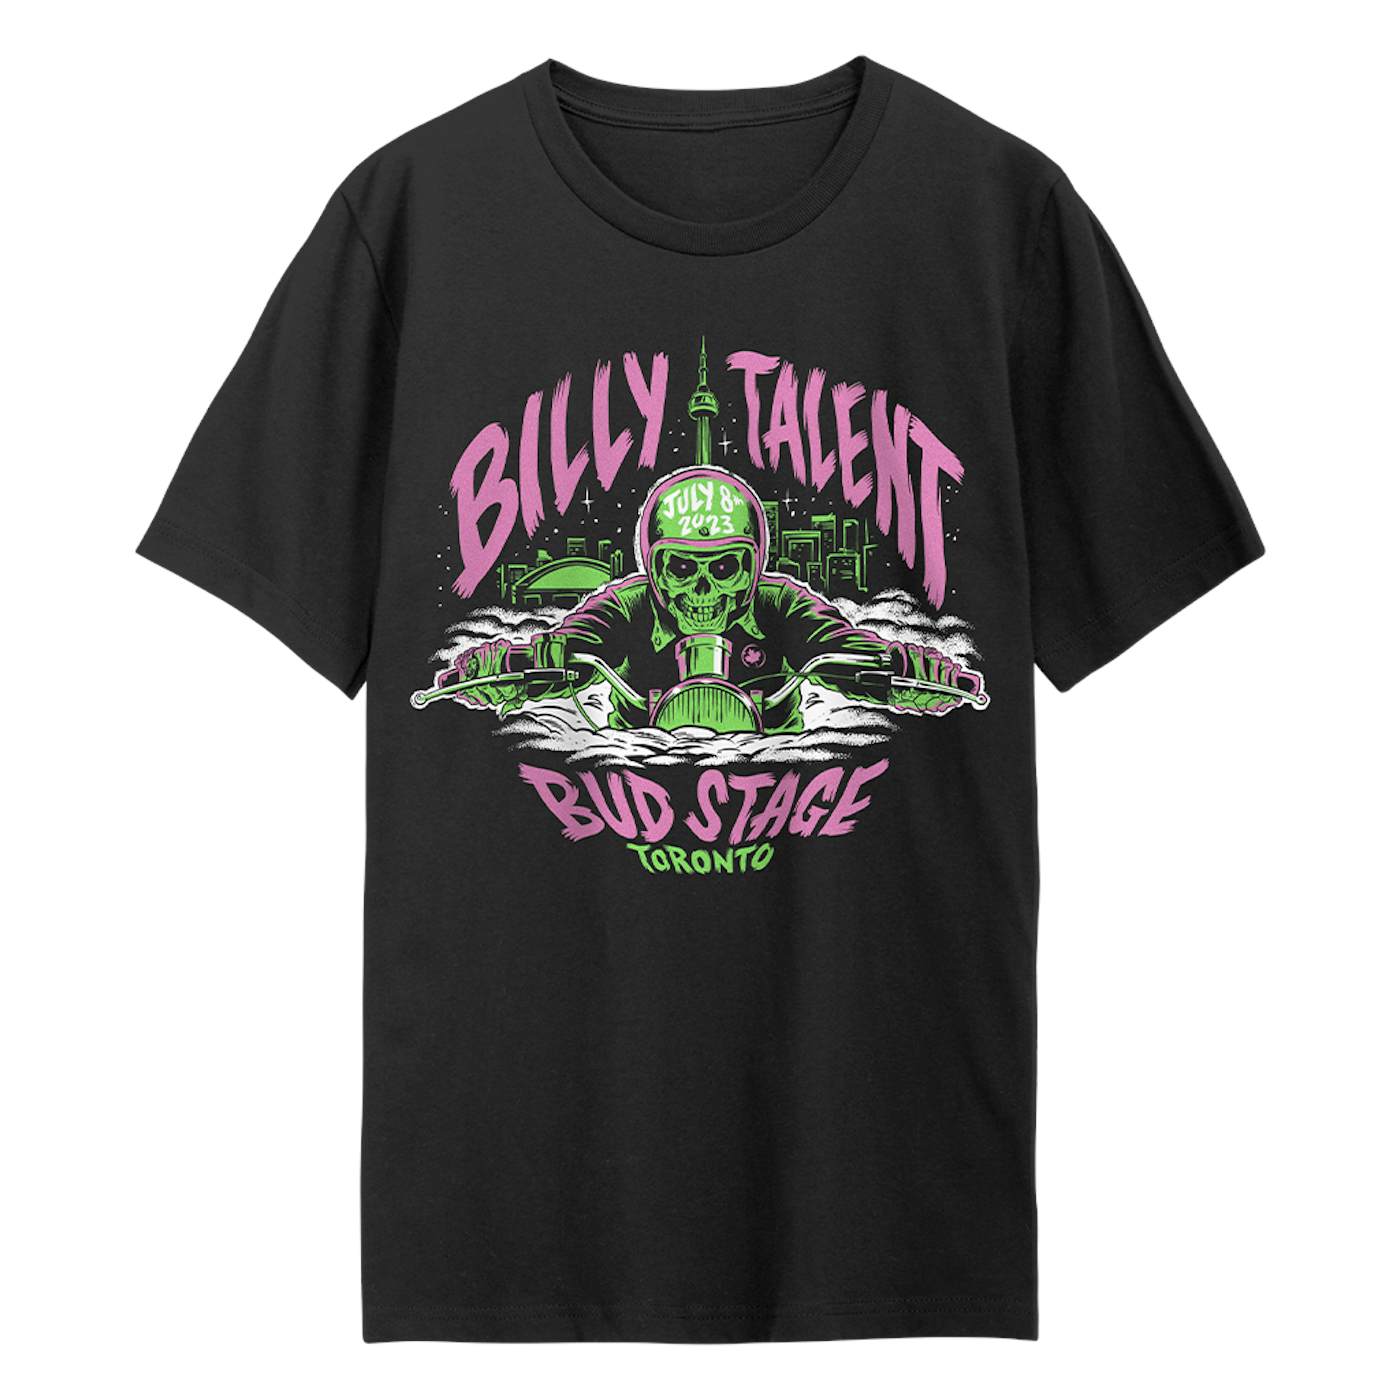 Billy Talent Bud Stage - Toronto T-Shirt